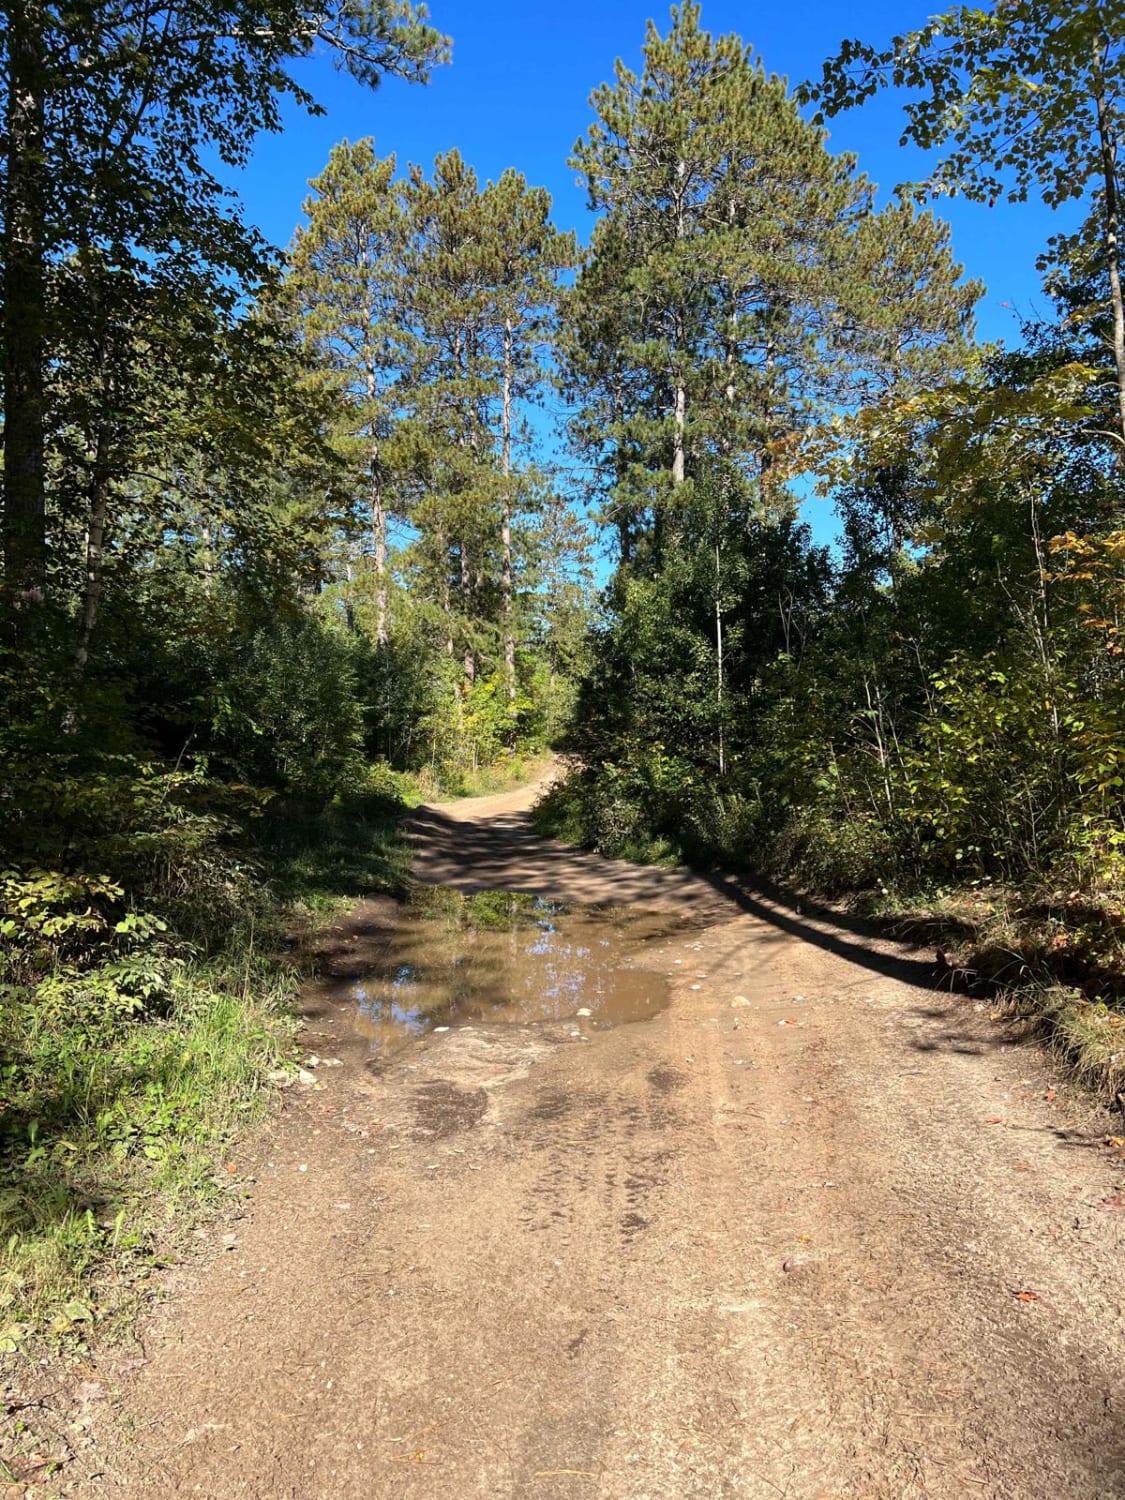 The Narrow Bull Moose Trail